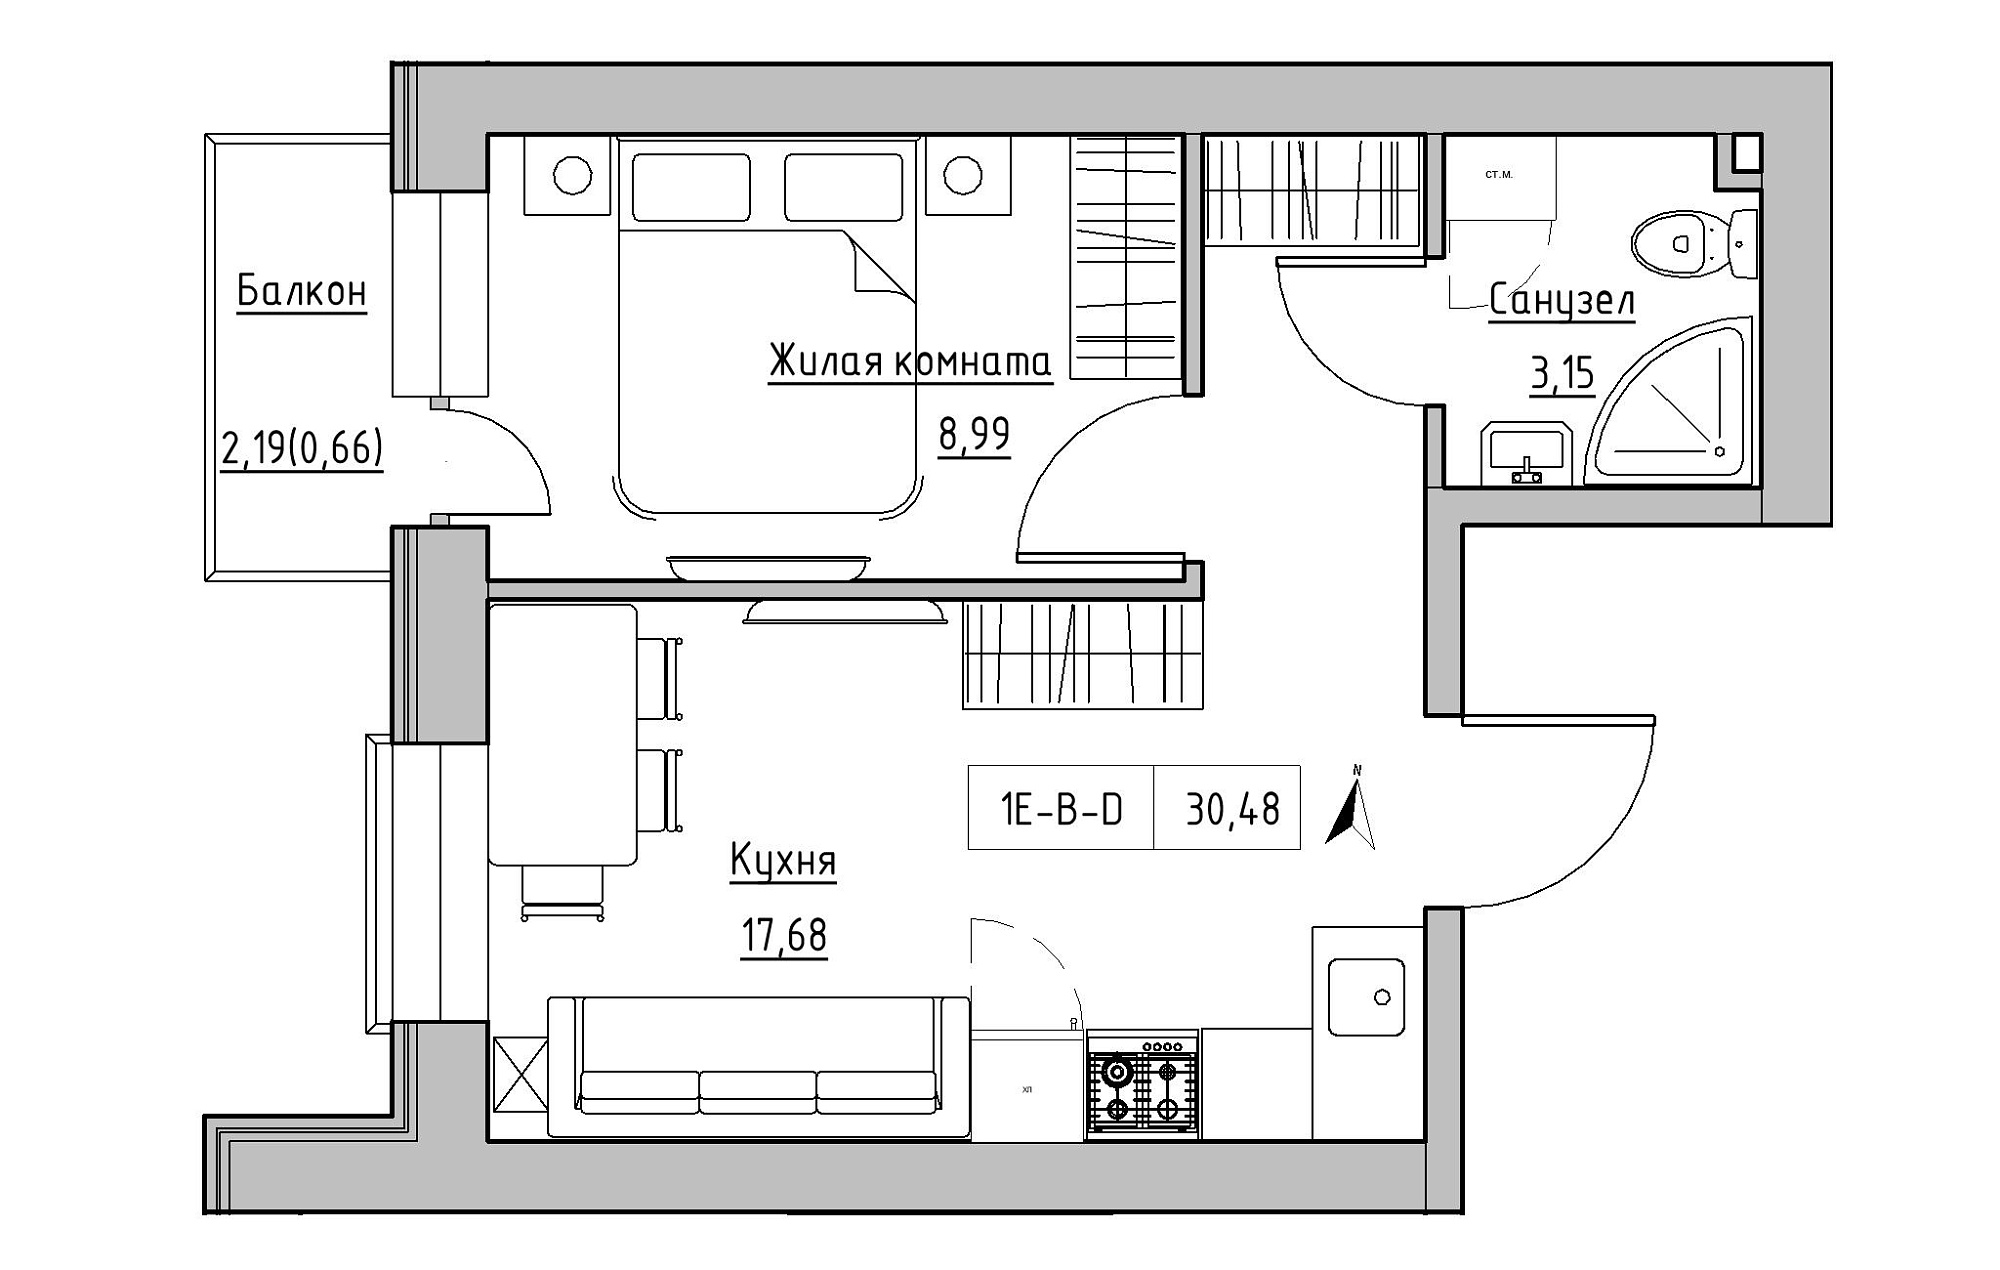 Planning 1-rm flats area 30.48m2, KS-019-04/0003.